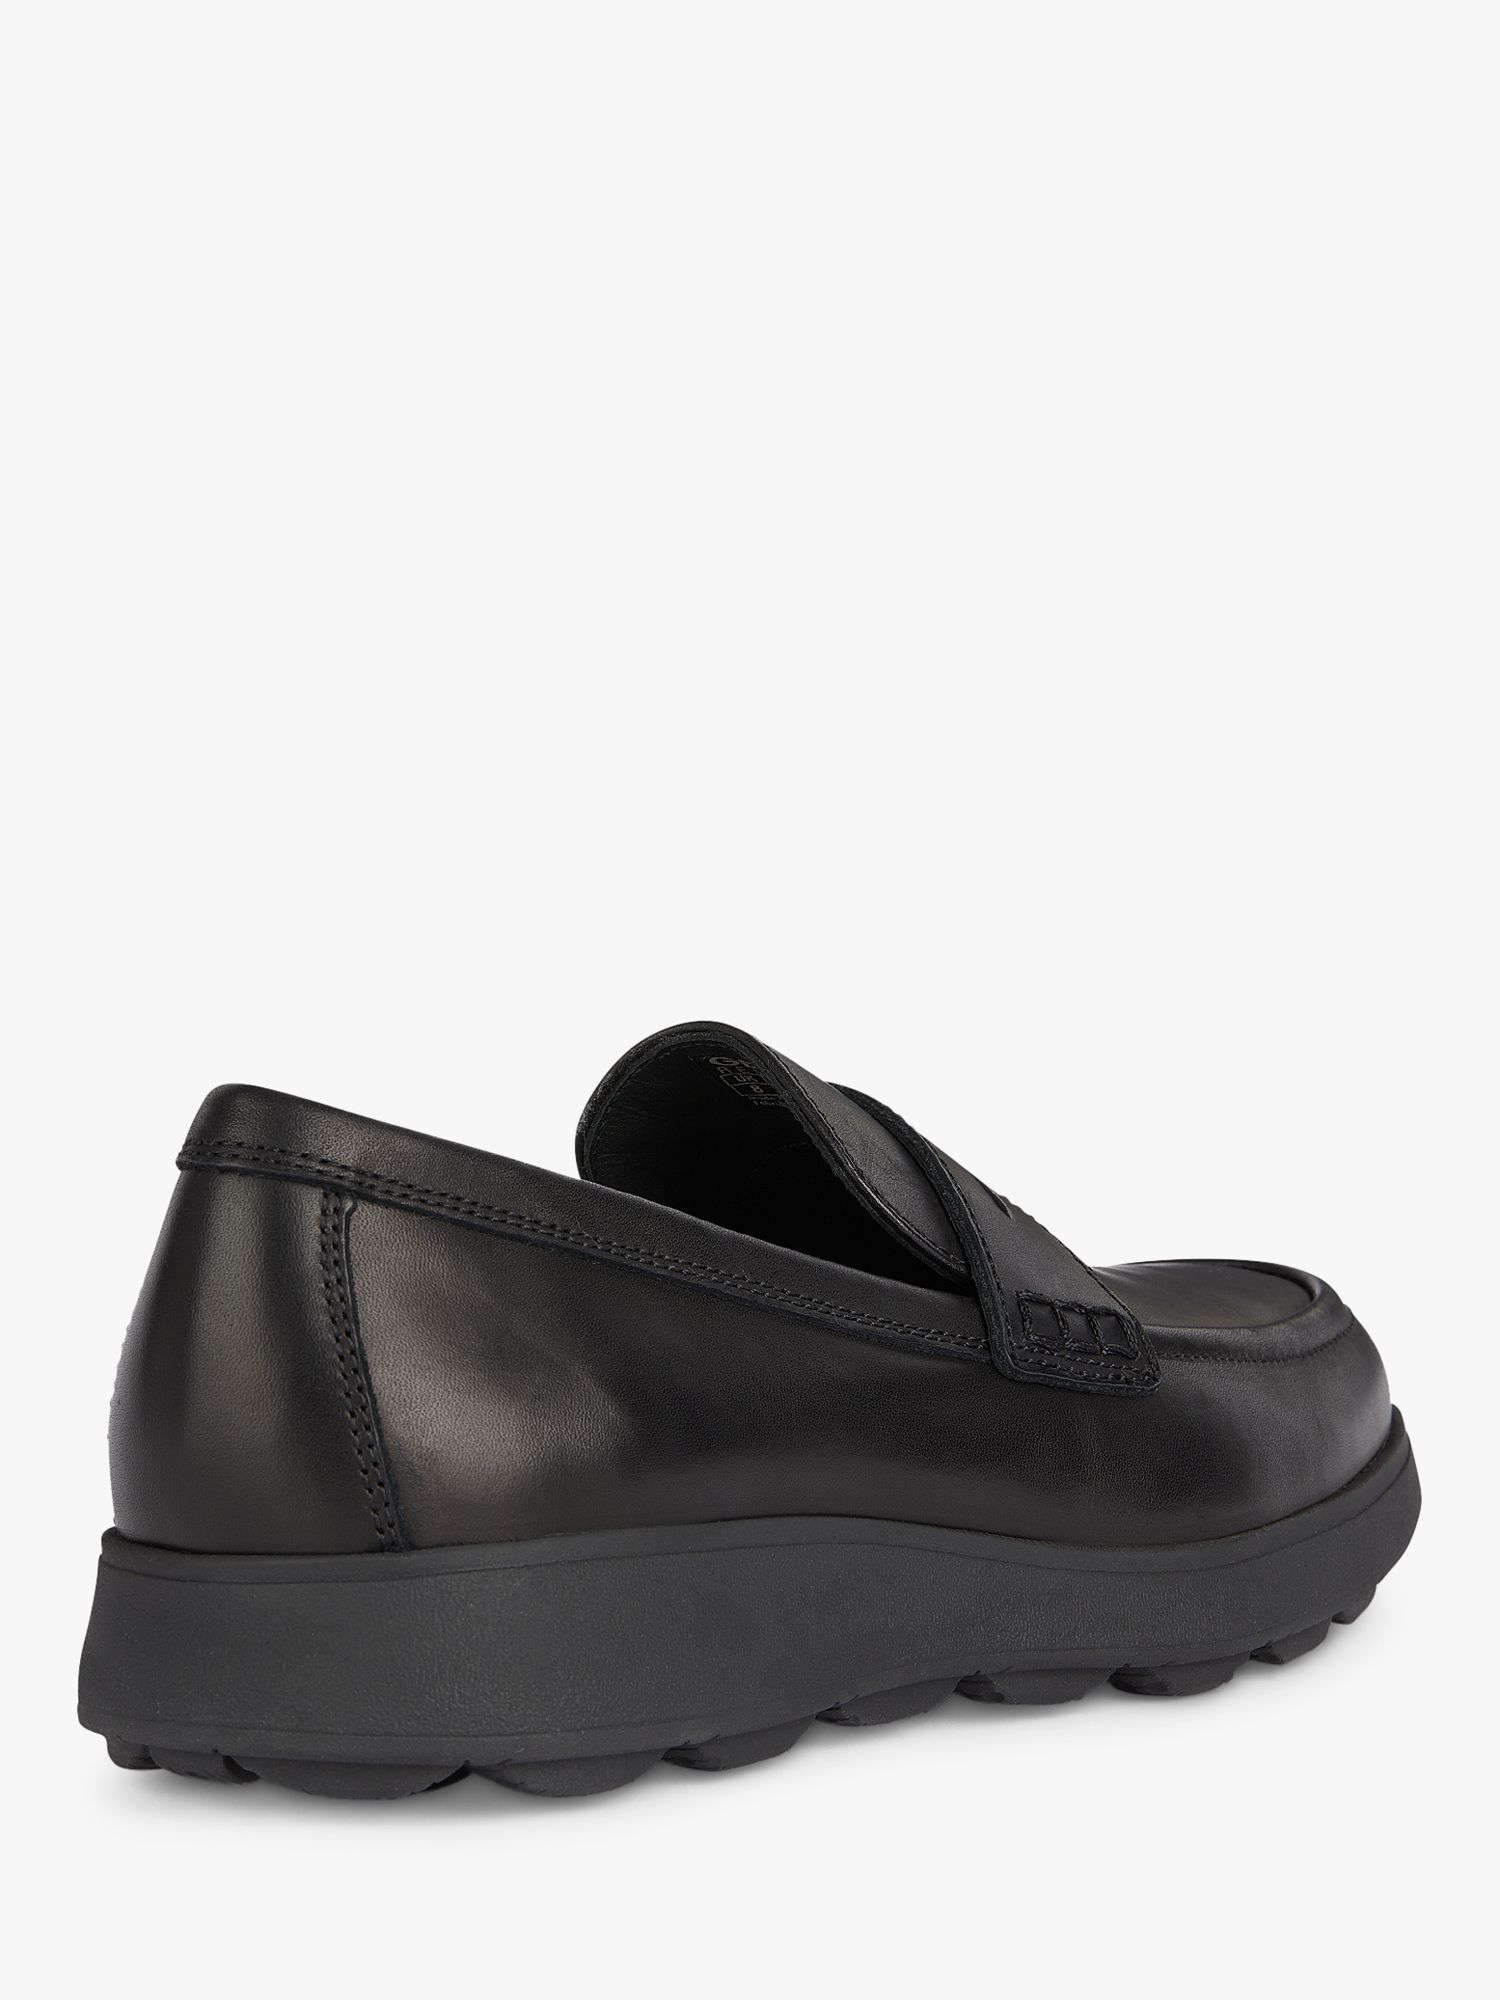 Geox Spherica EC10 Leather Loafers, Black, EU39